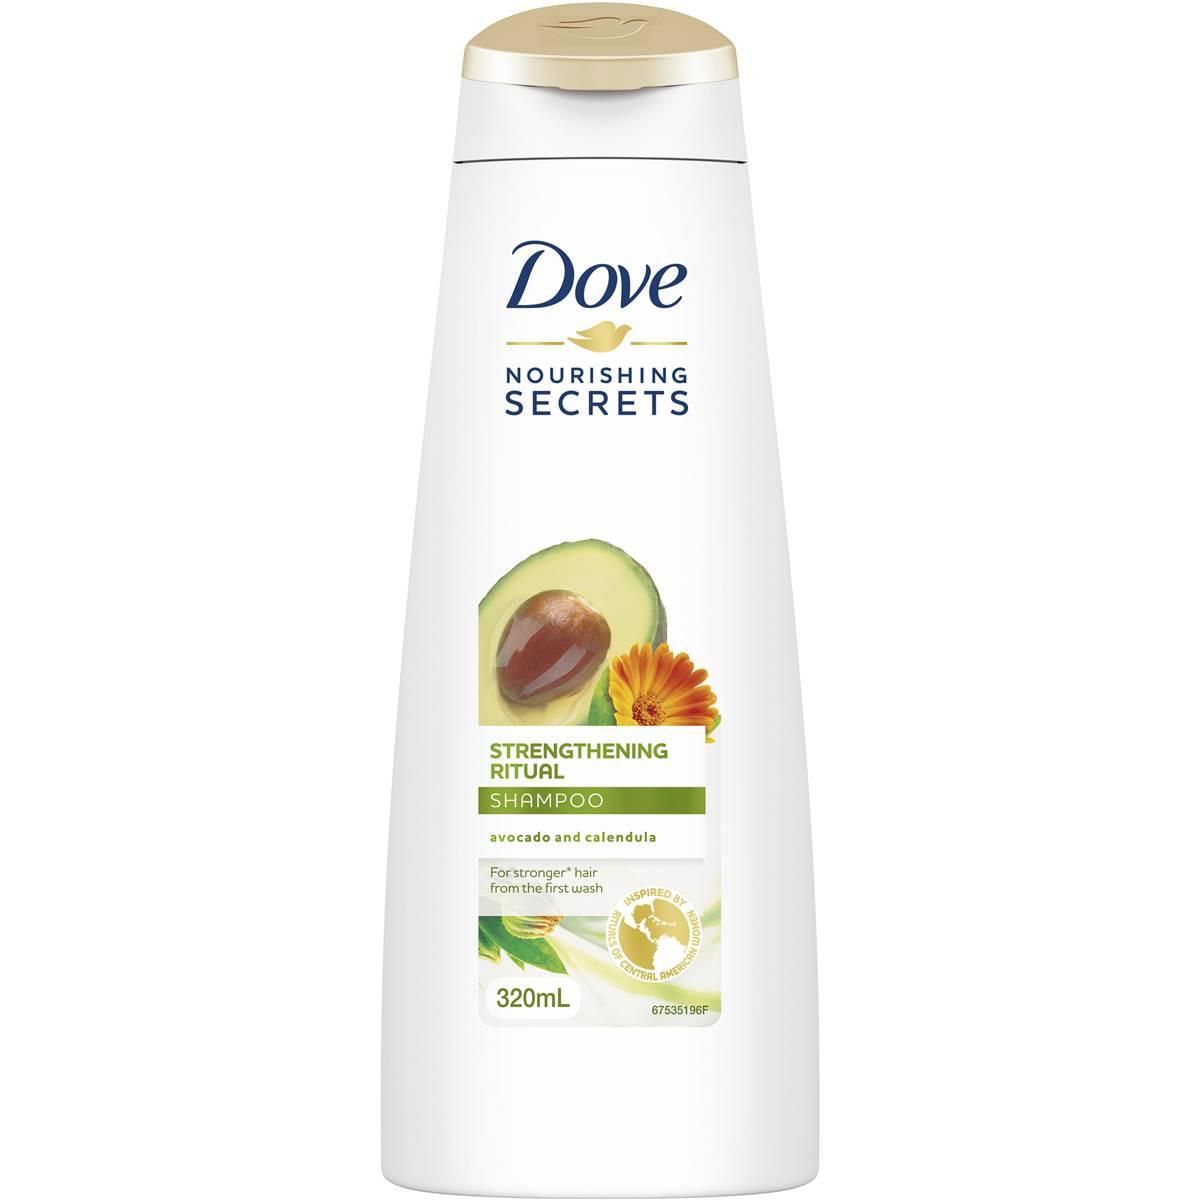 Dove Nourishing Secrets Strengthening Ritual Shampoo 320ml